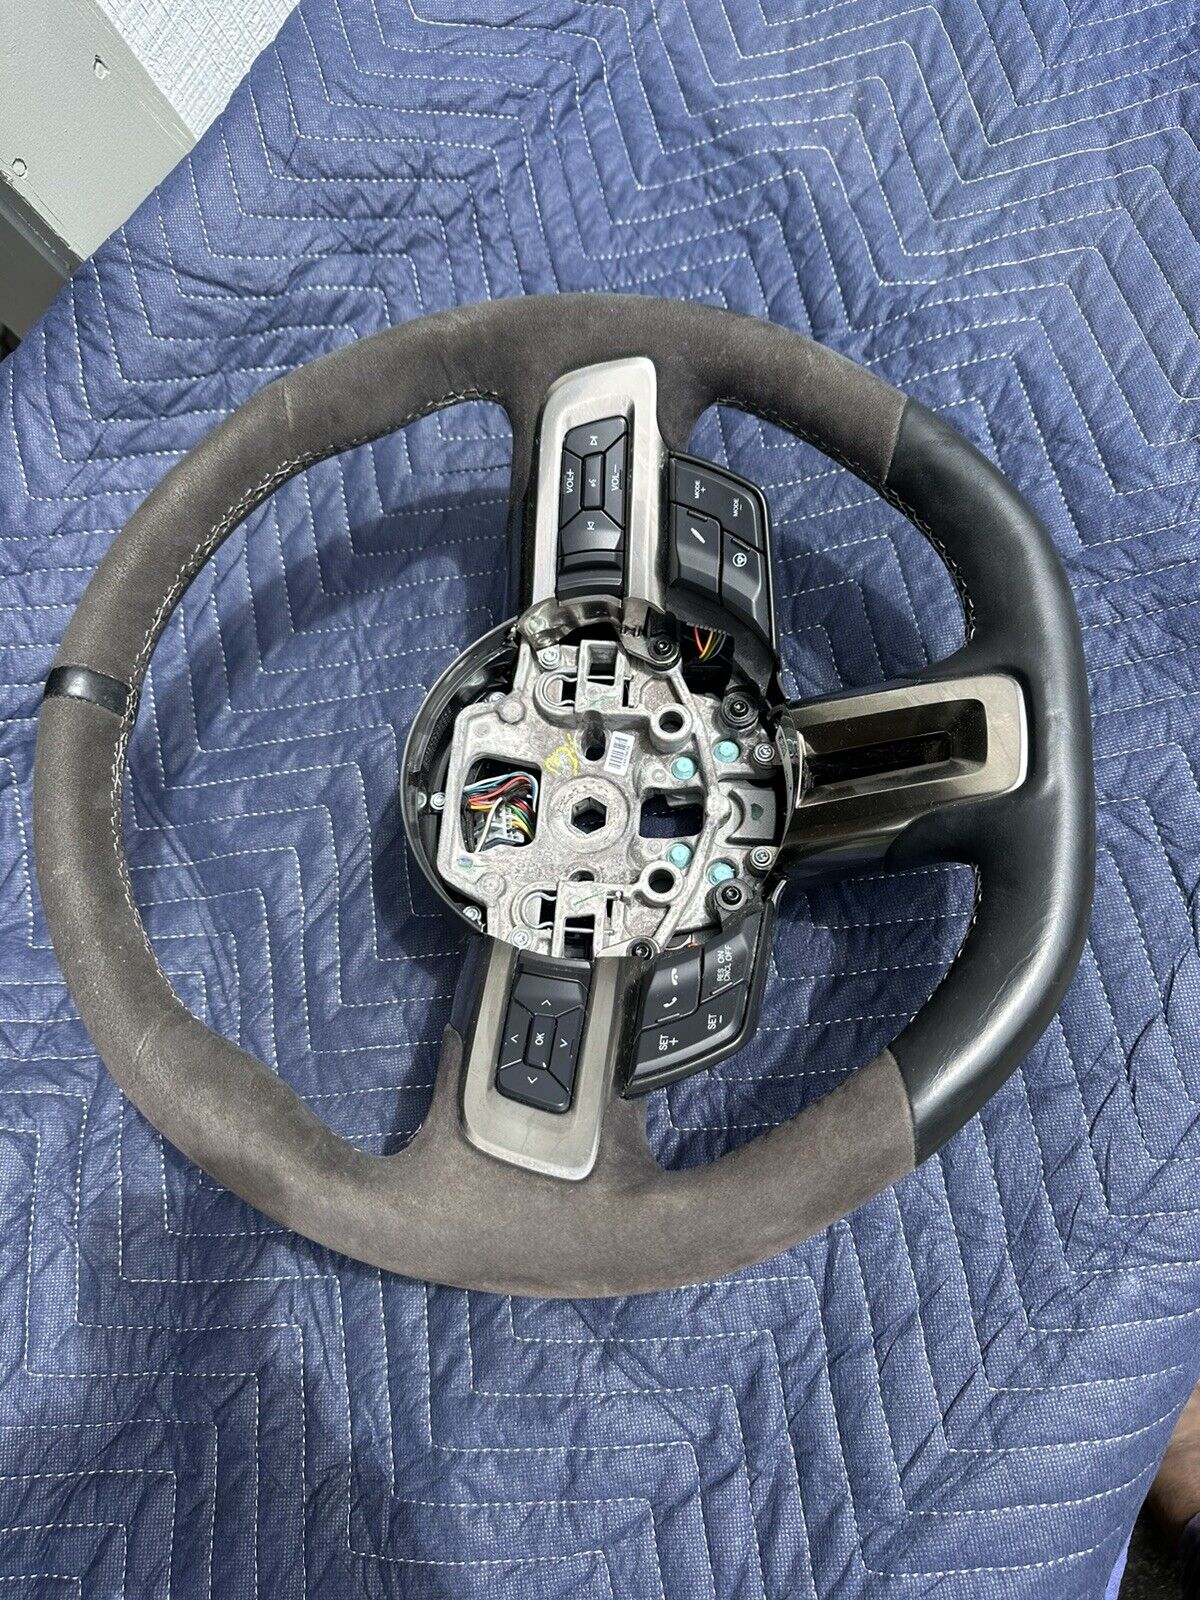 2016 Gt350 Shelby Mustang Steering Wheel 